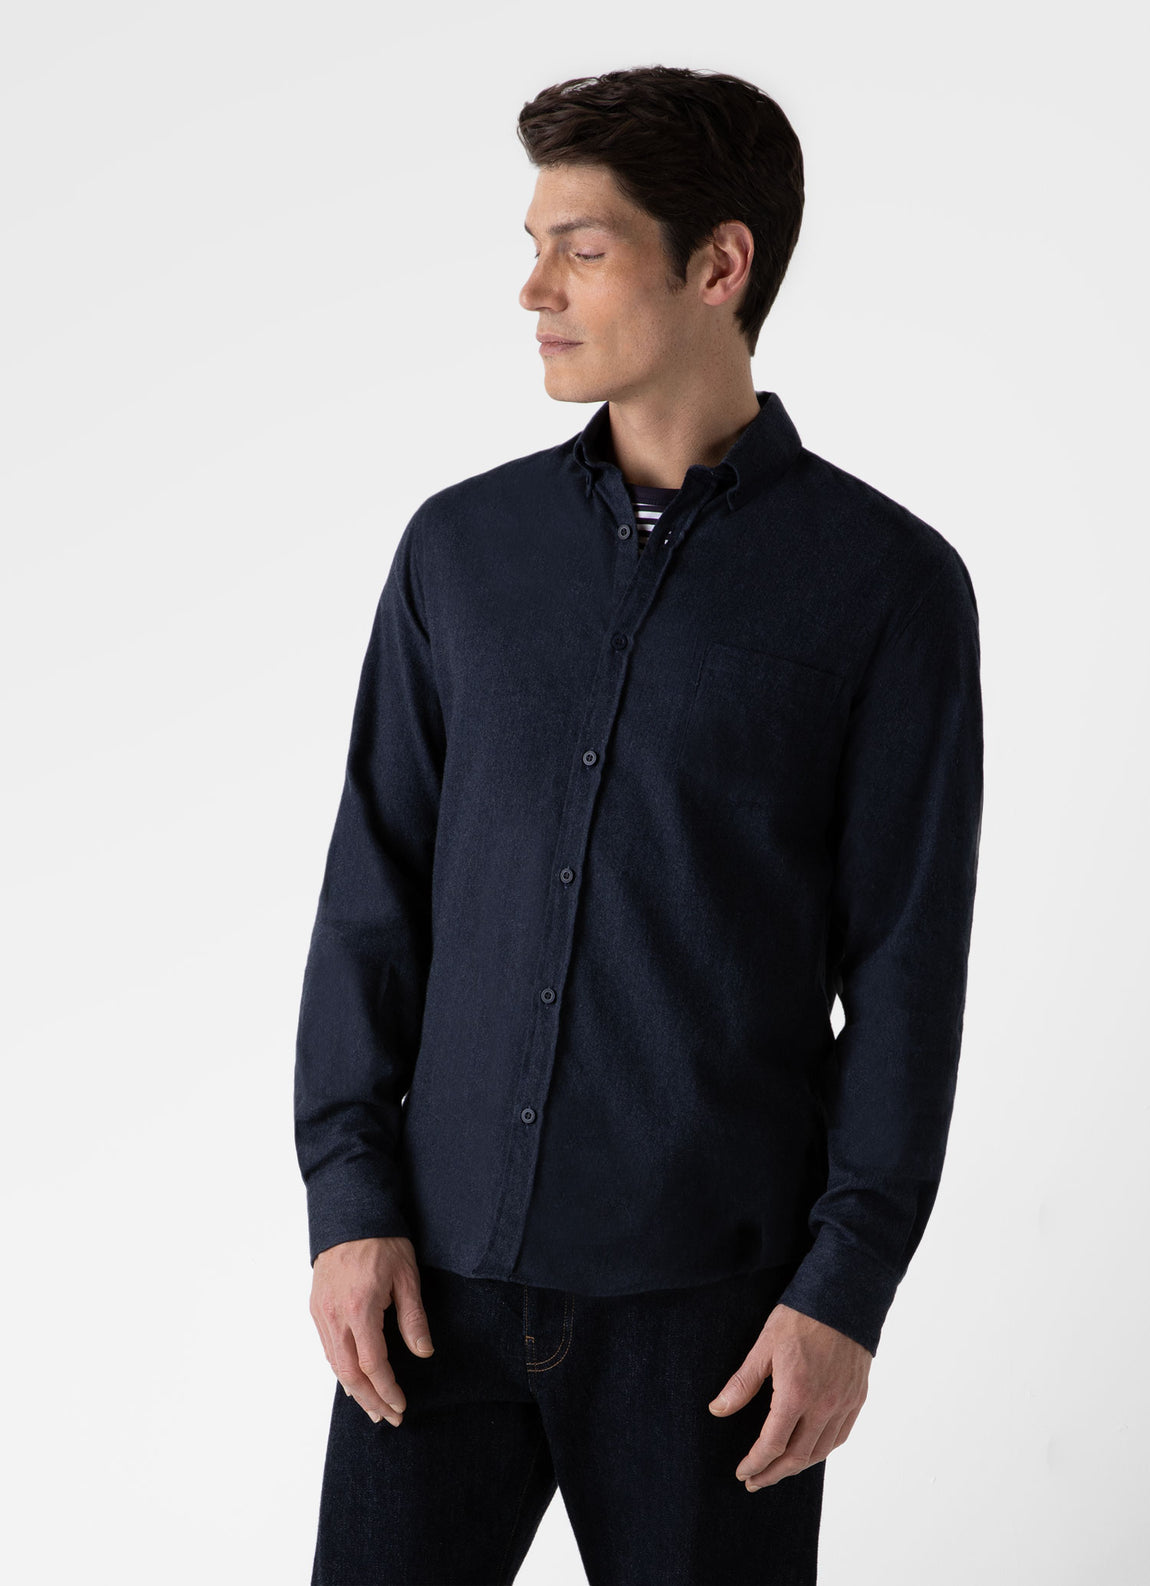 Men's Button Down Flannel Shirt in Navy Melange | Sunspel